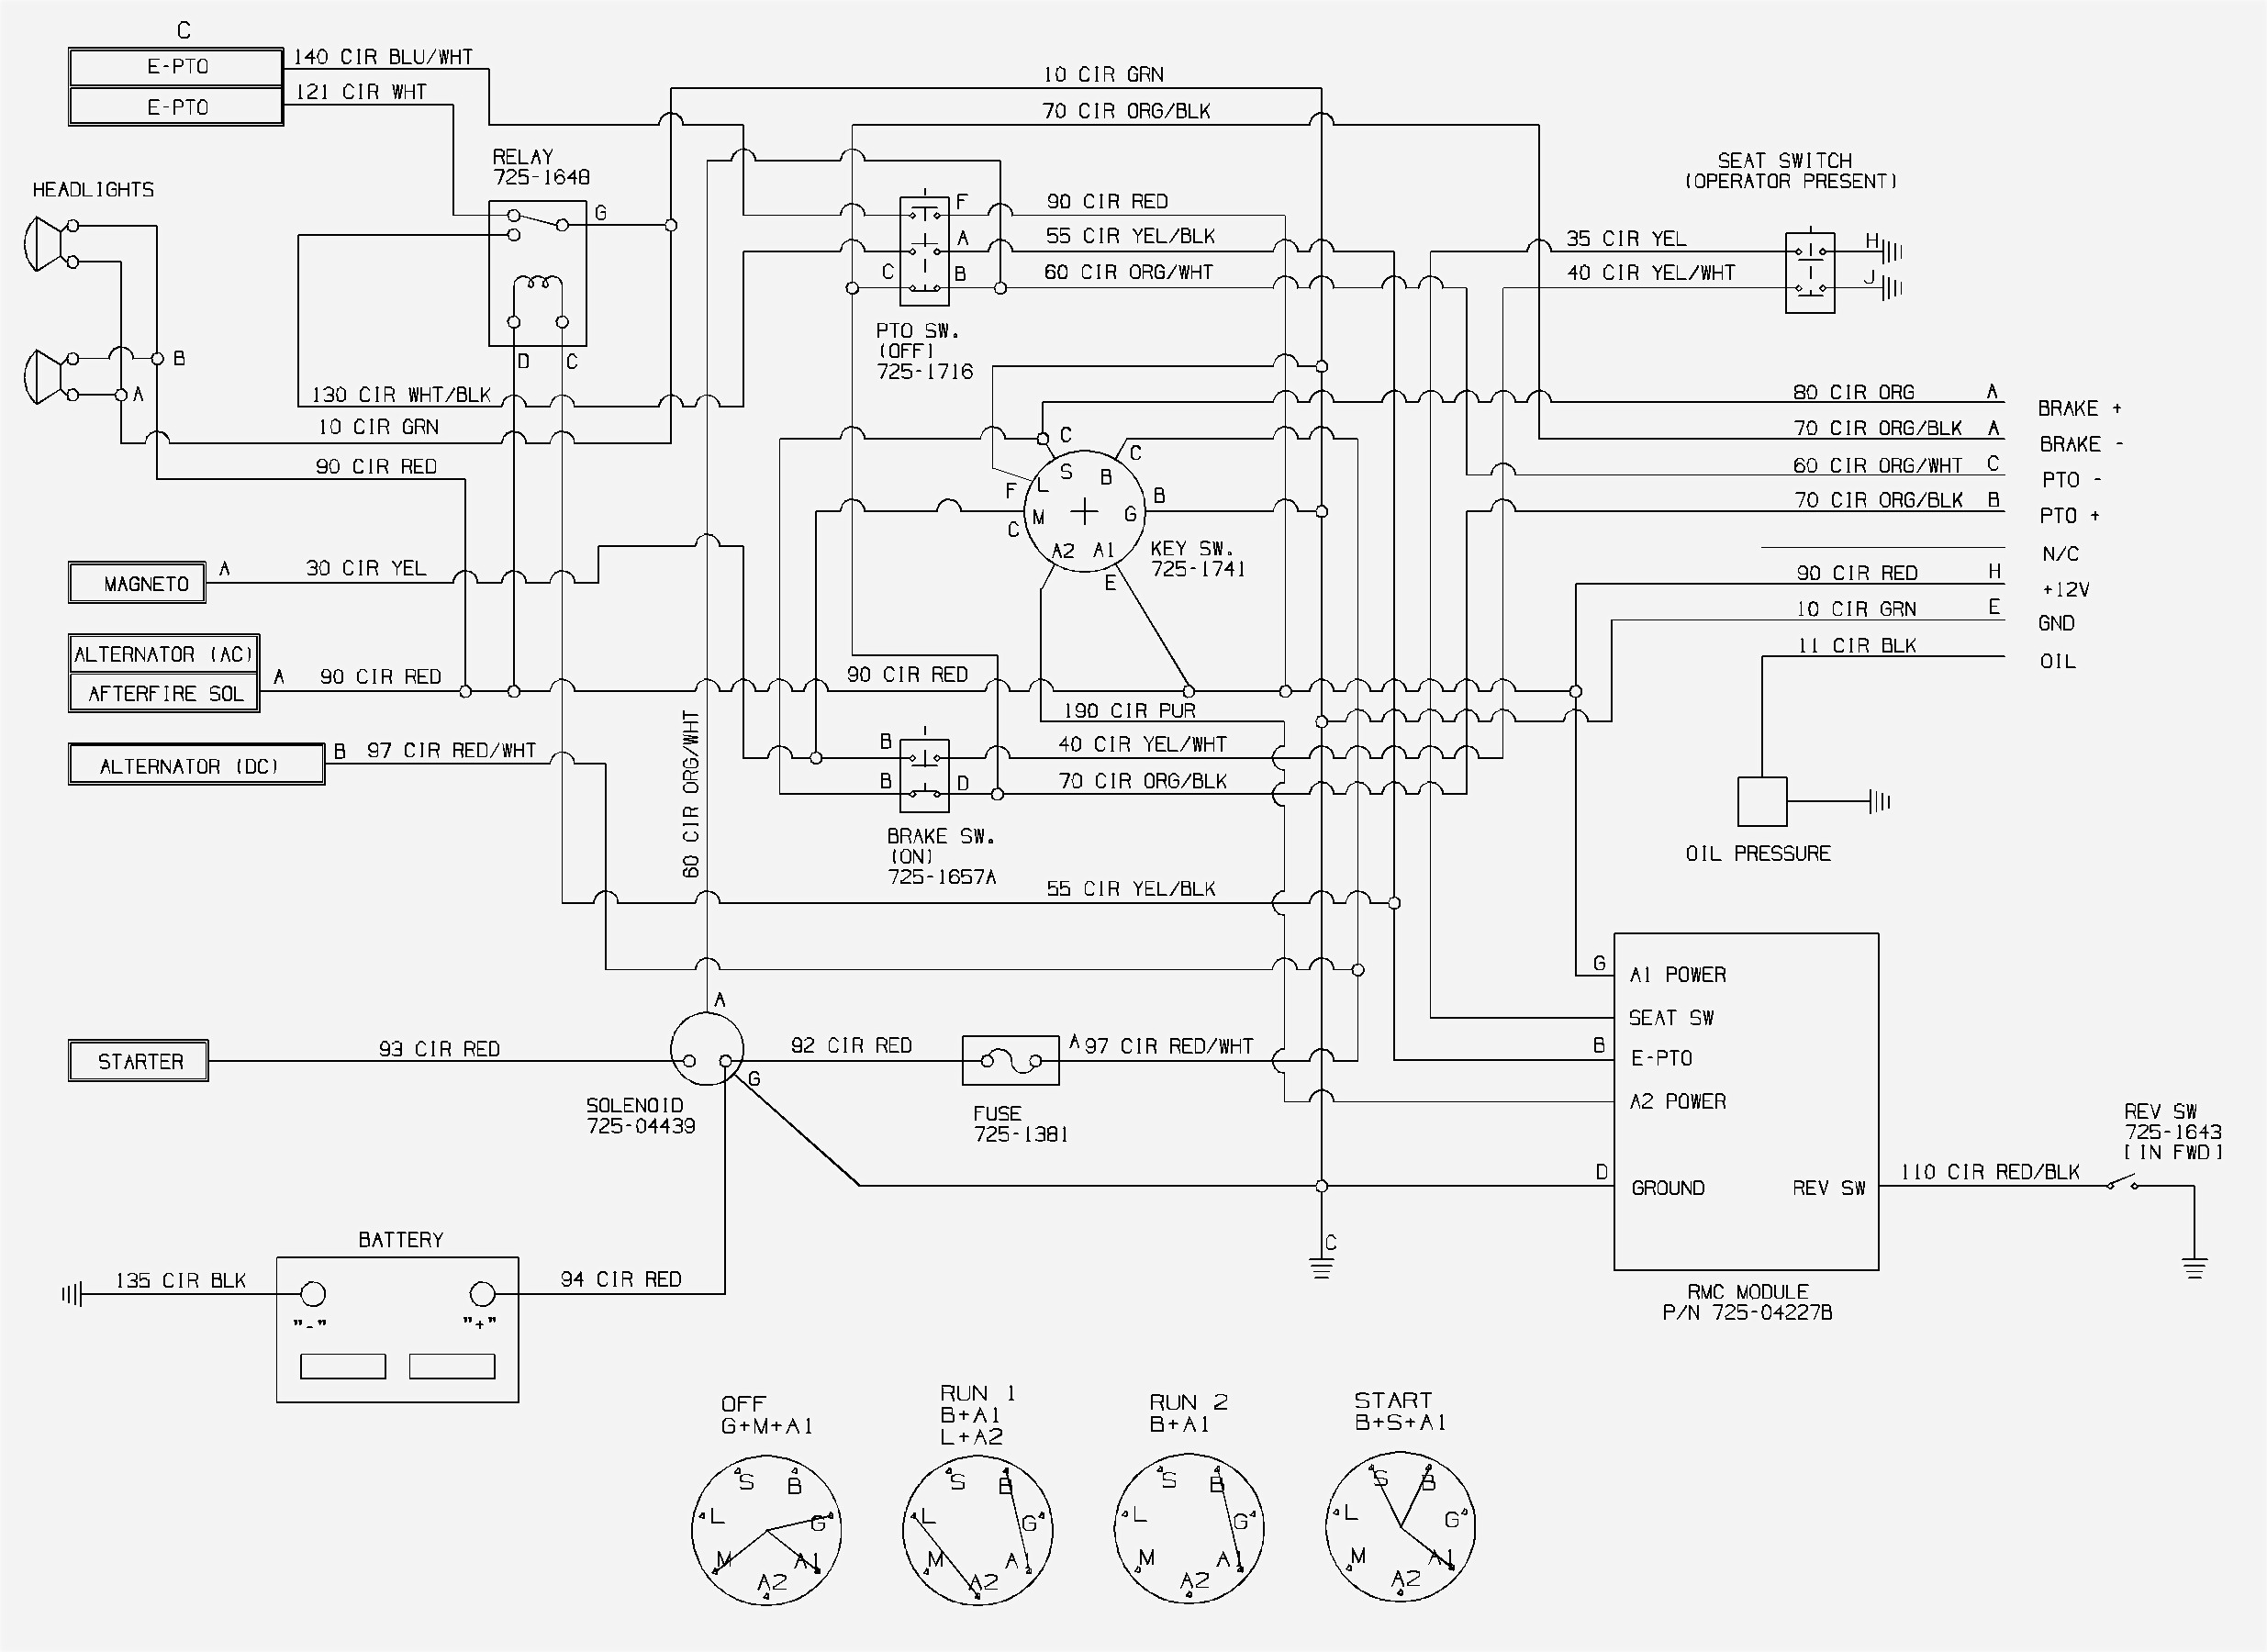 Ford Escape Parts Diagram ford Cvt Transmission Wiring Diagram Wiring Diagram Of Ford Escape Parts Diagram